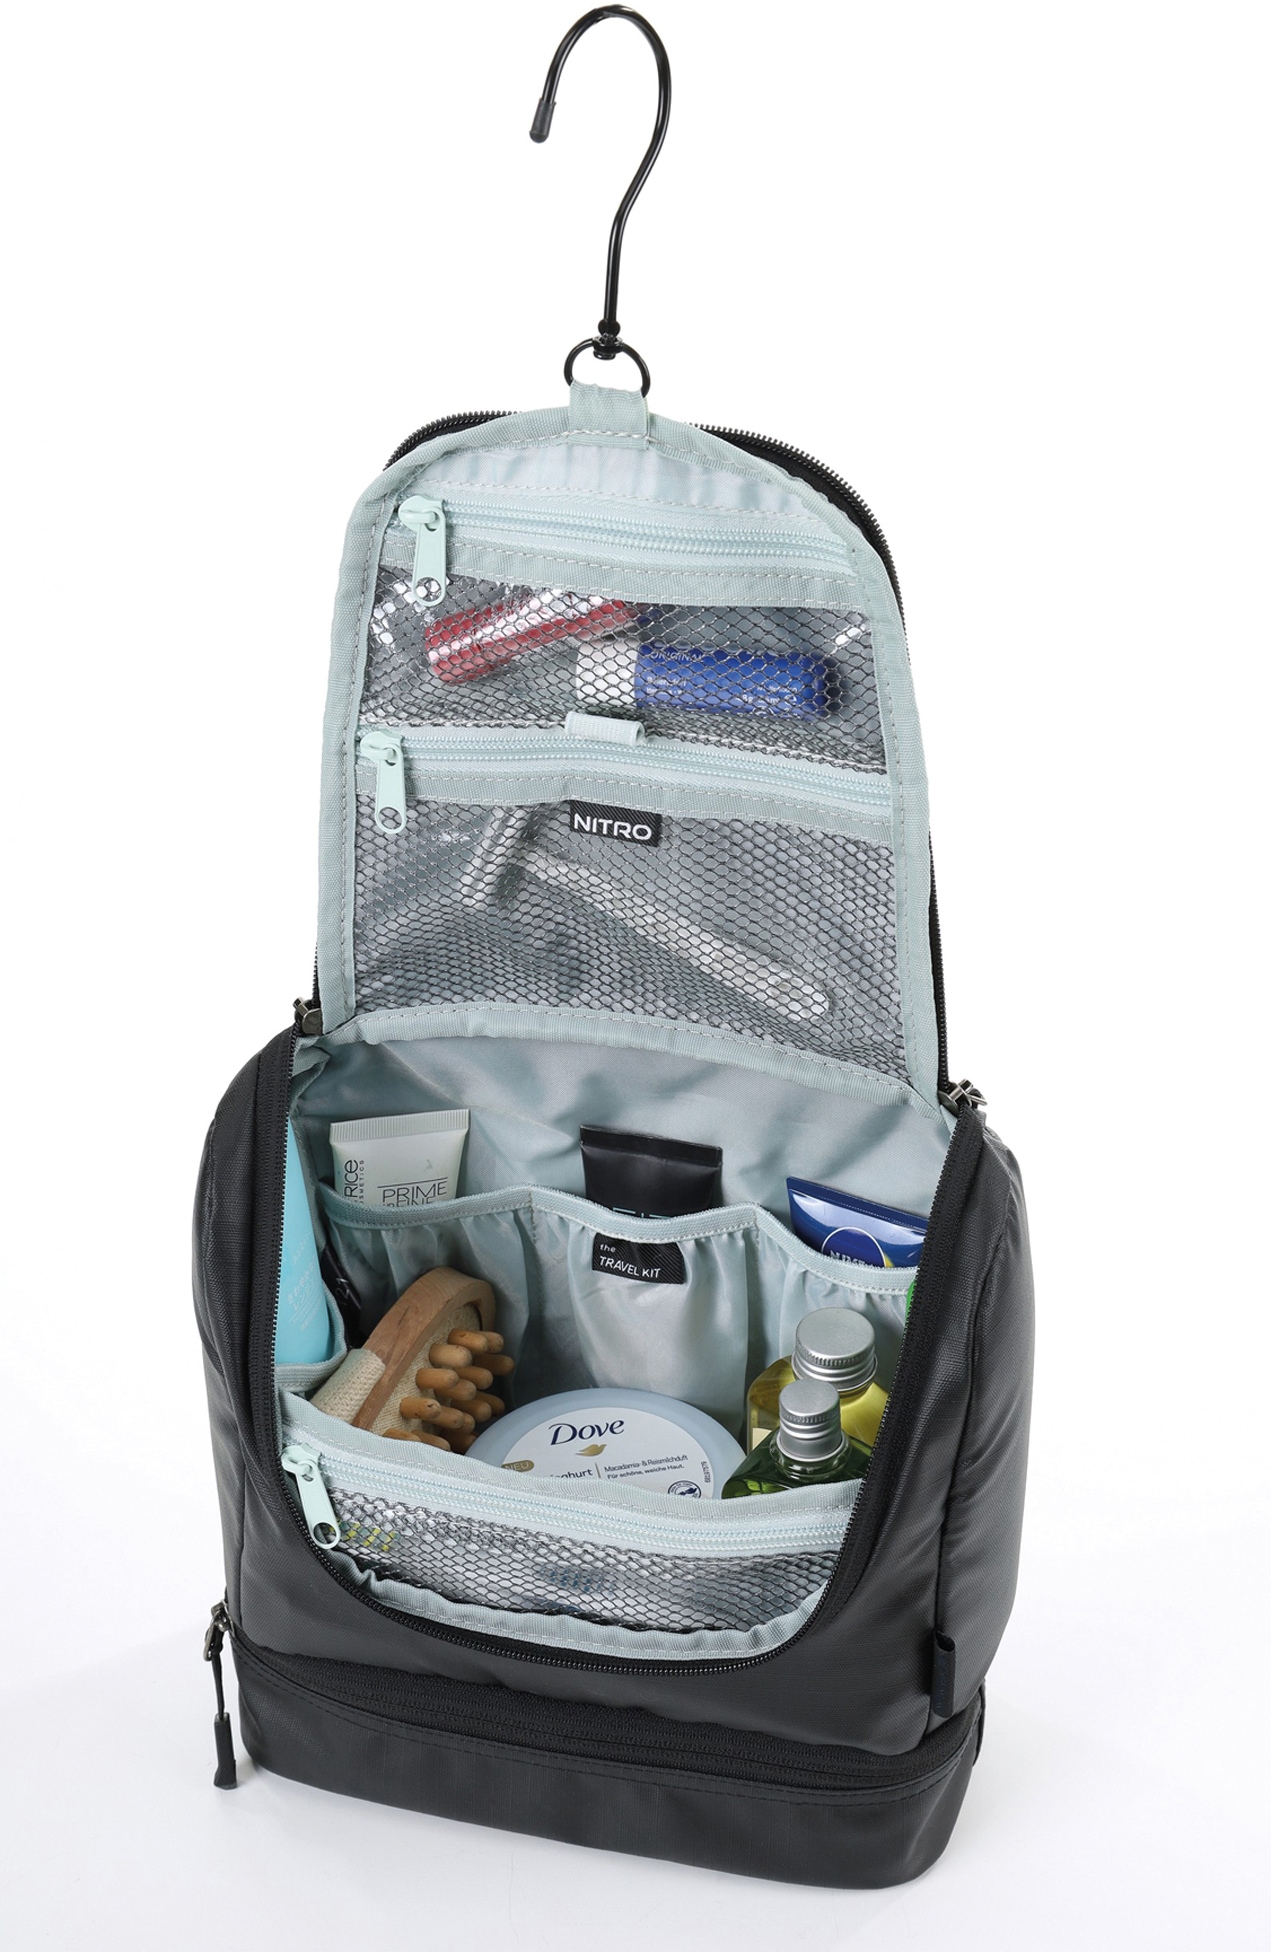 NITRO Kulturbeutel »Travel Kit«, Kosmetiktasche für Reise, Waschtasche, Reisetasche für Kosmetikartikel